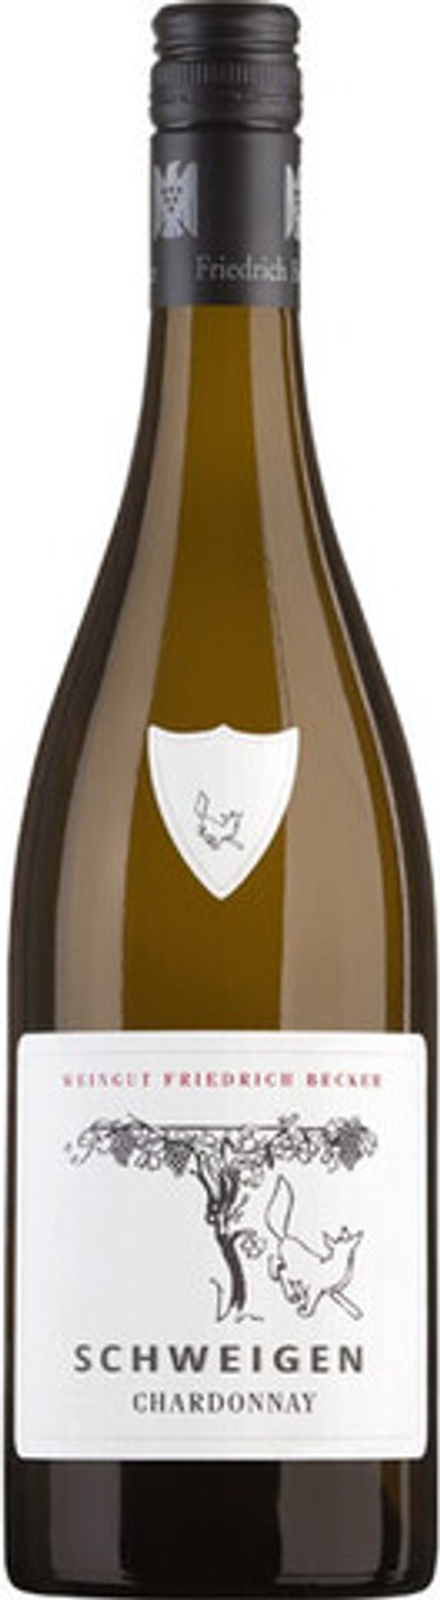 Вино Friedrich Becker Schweigen Chardonnay, 0,75 л.